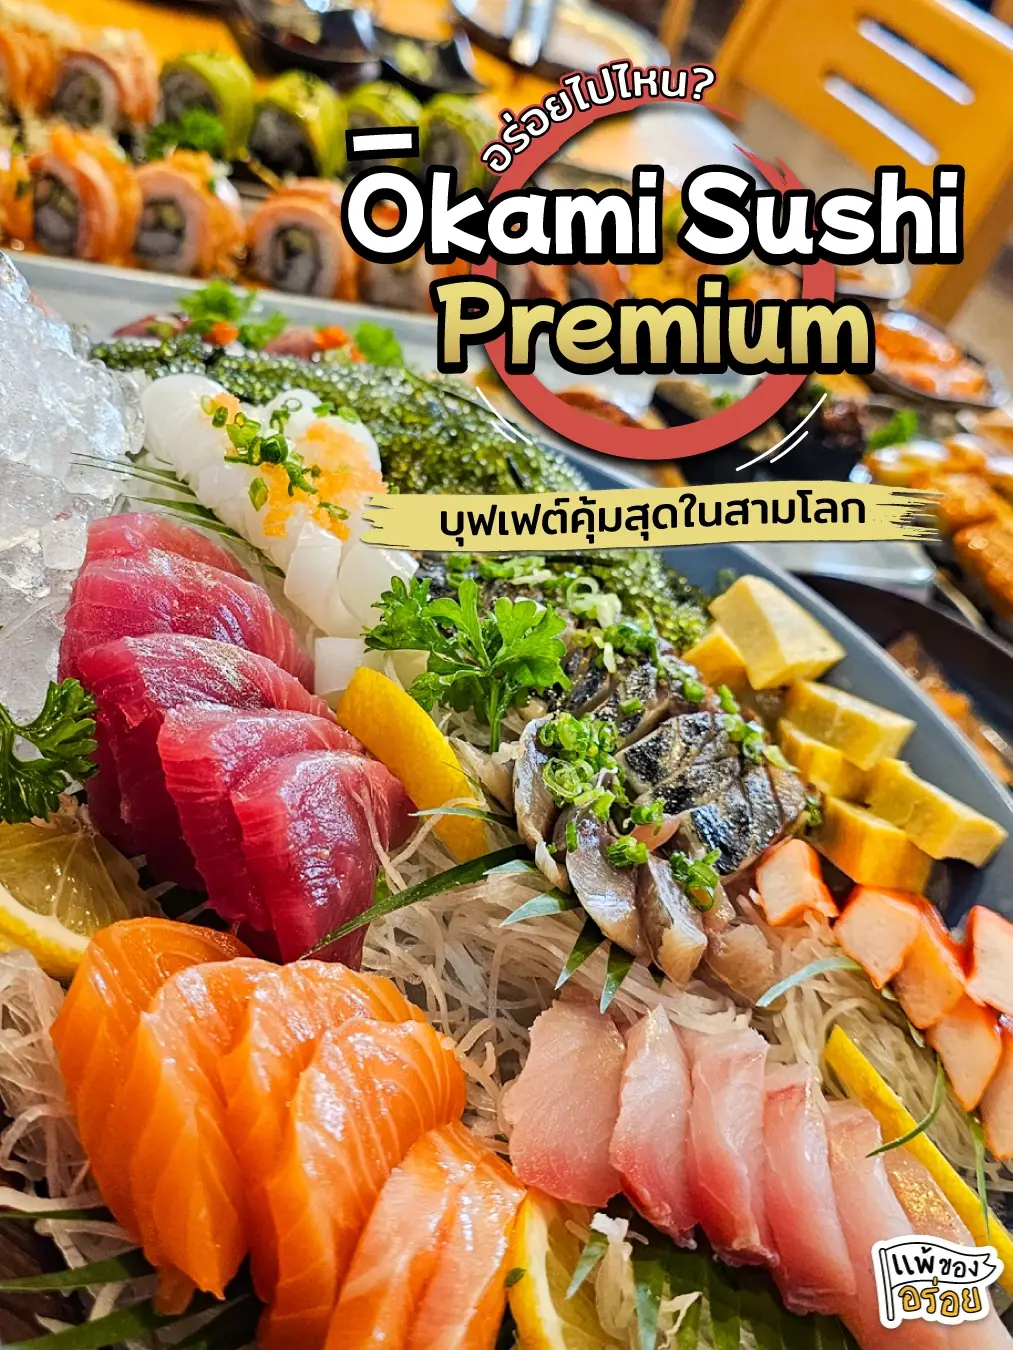 OKAMI SUSHI SRINAKARIN BUFFET - Japanese Delicatessen ใน เขต ประเวศ